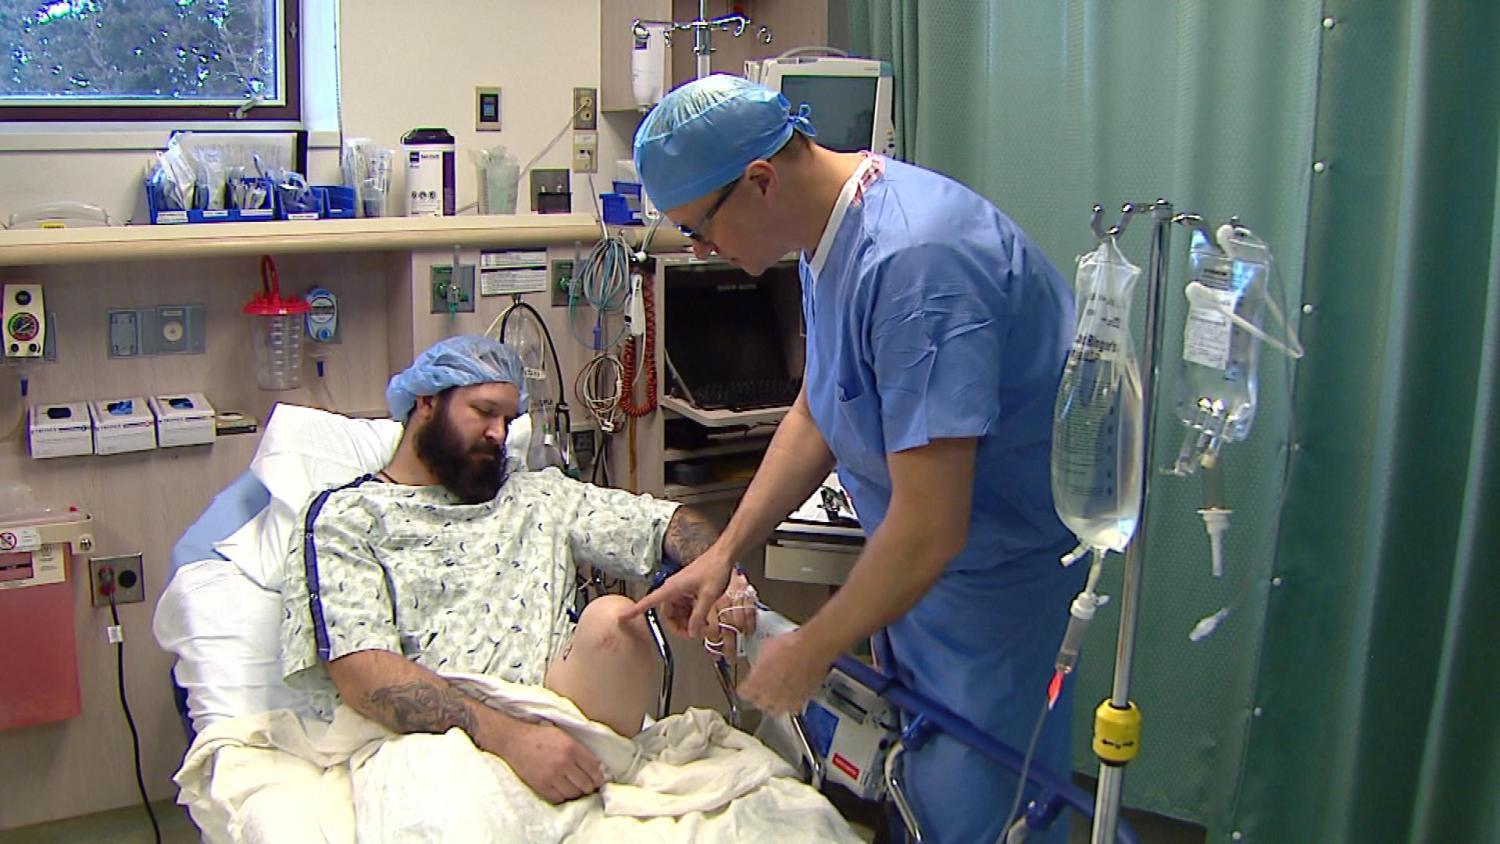 Wounded veteran, double amputee undergo groundbreaking surgery - CBS News